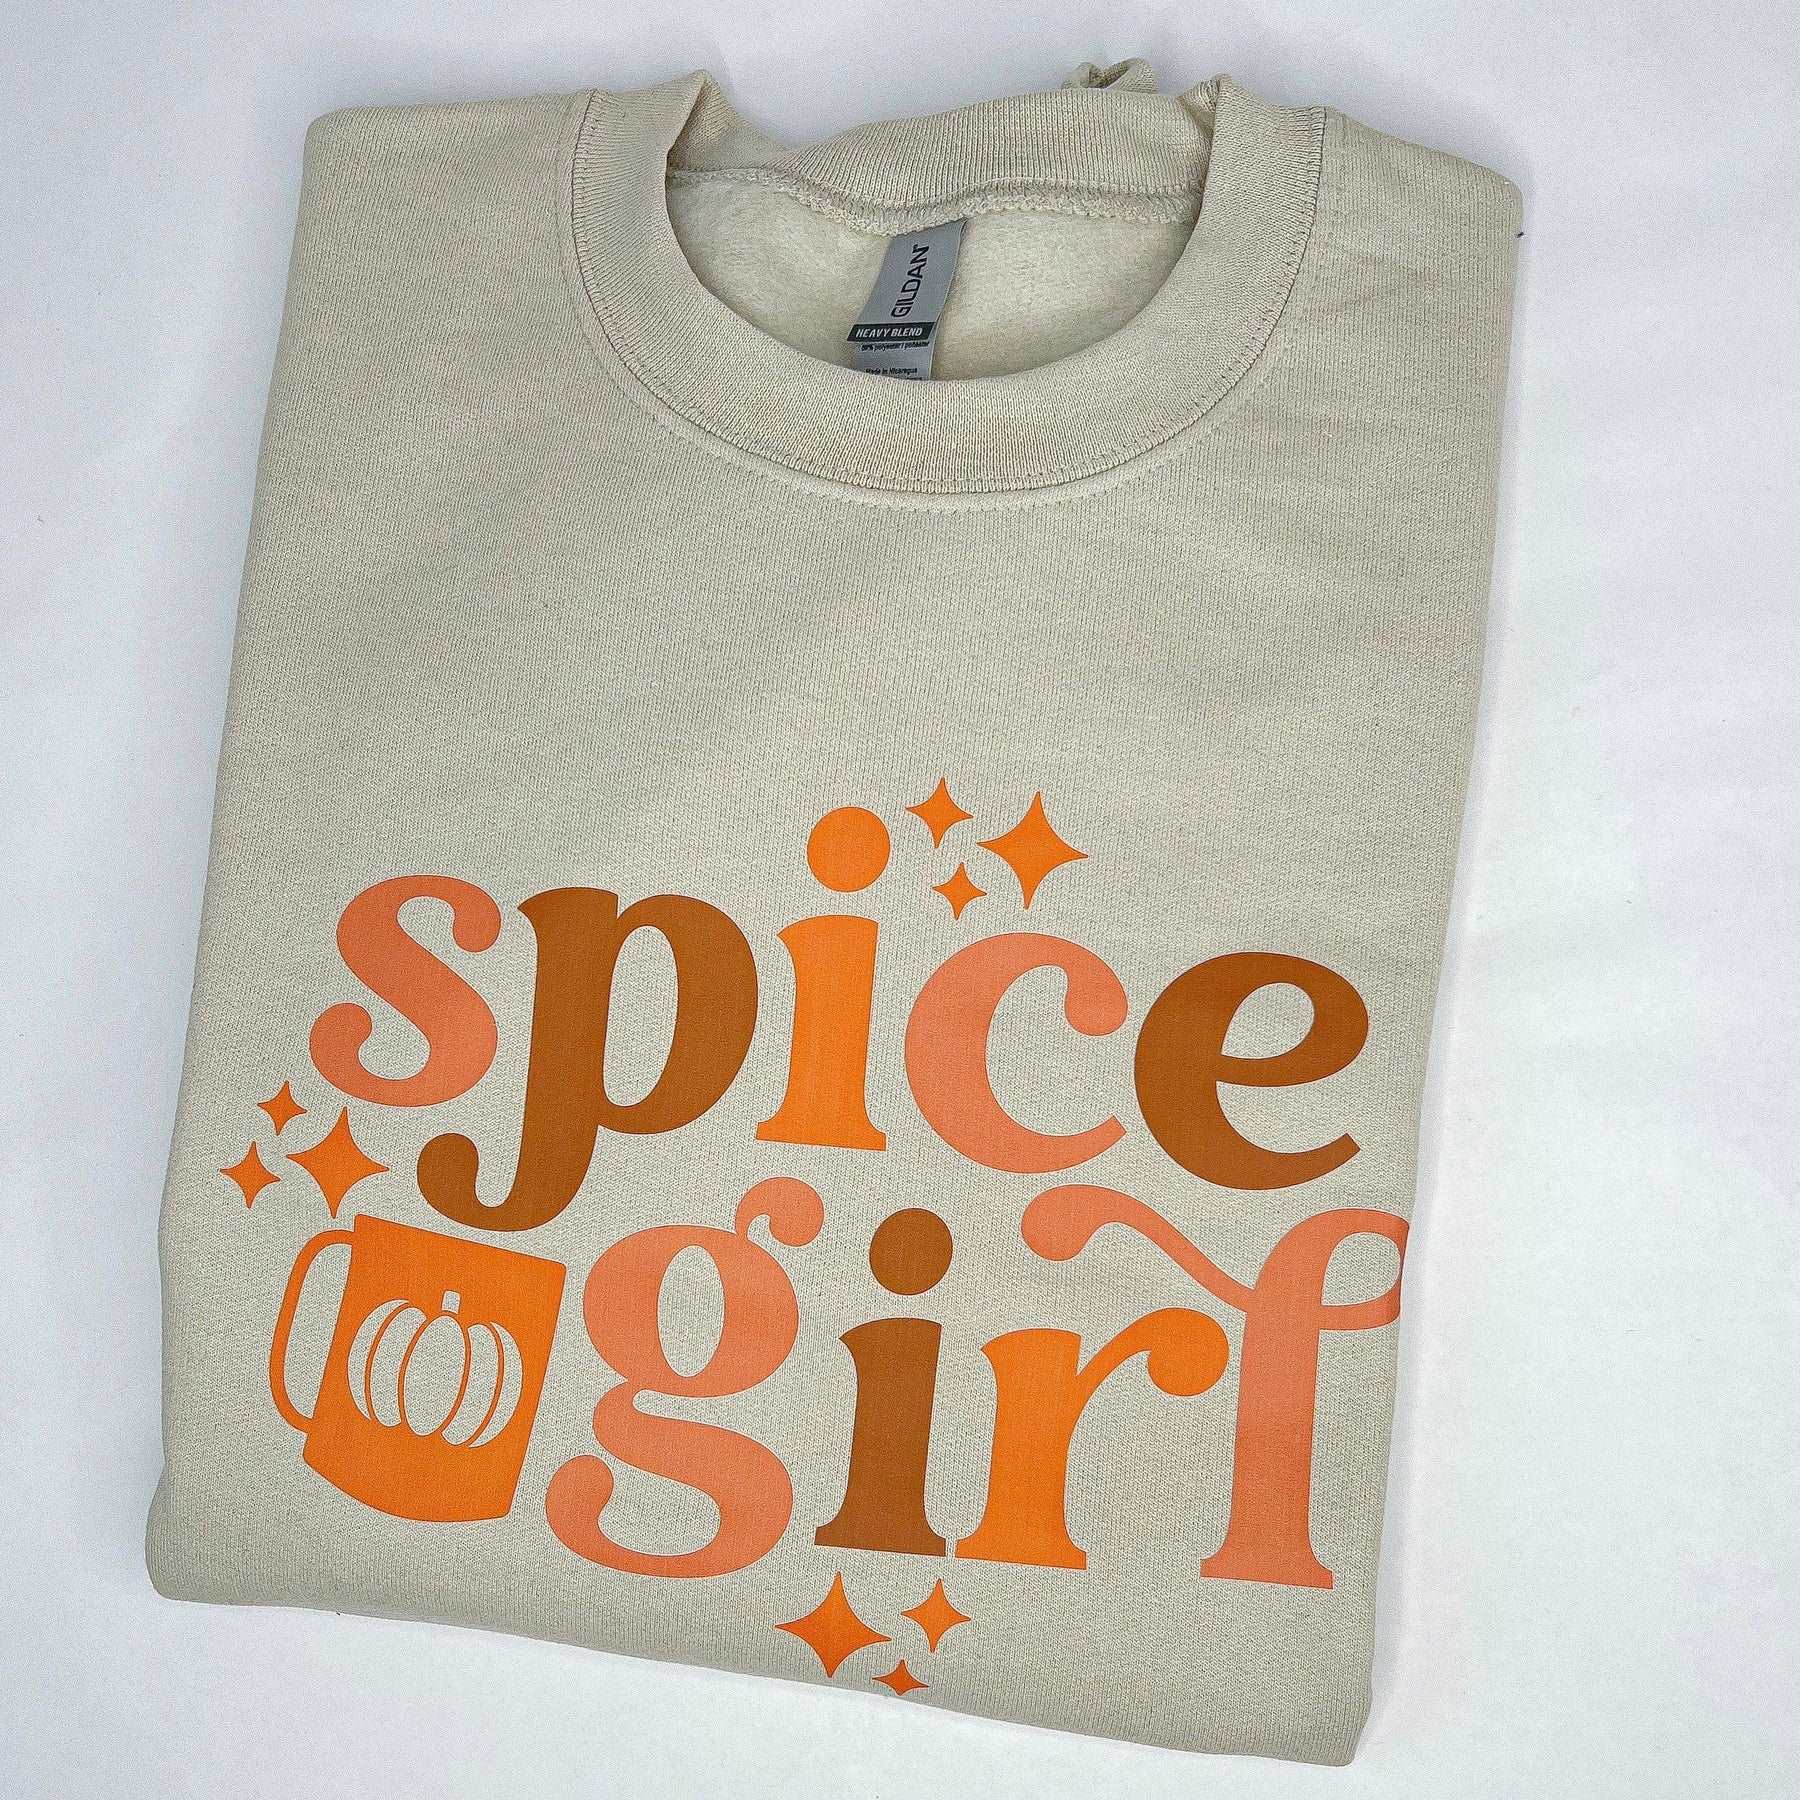 Spice Girl Fall Thanksgiving Shirt (Tee or Sweatshirt)